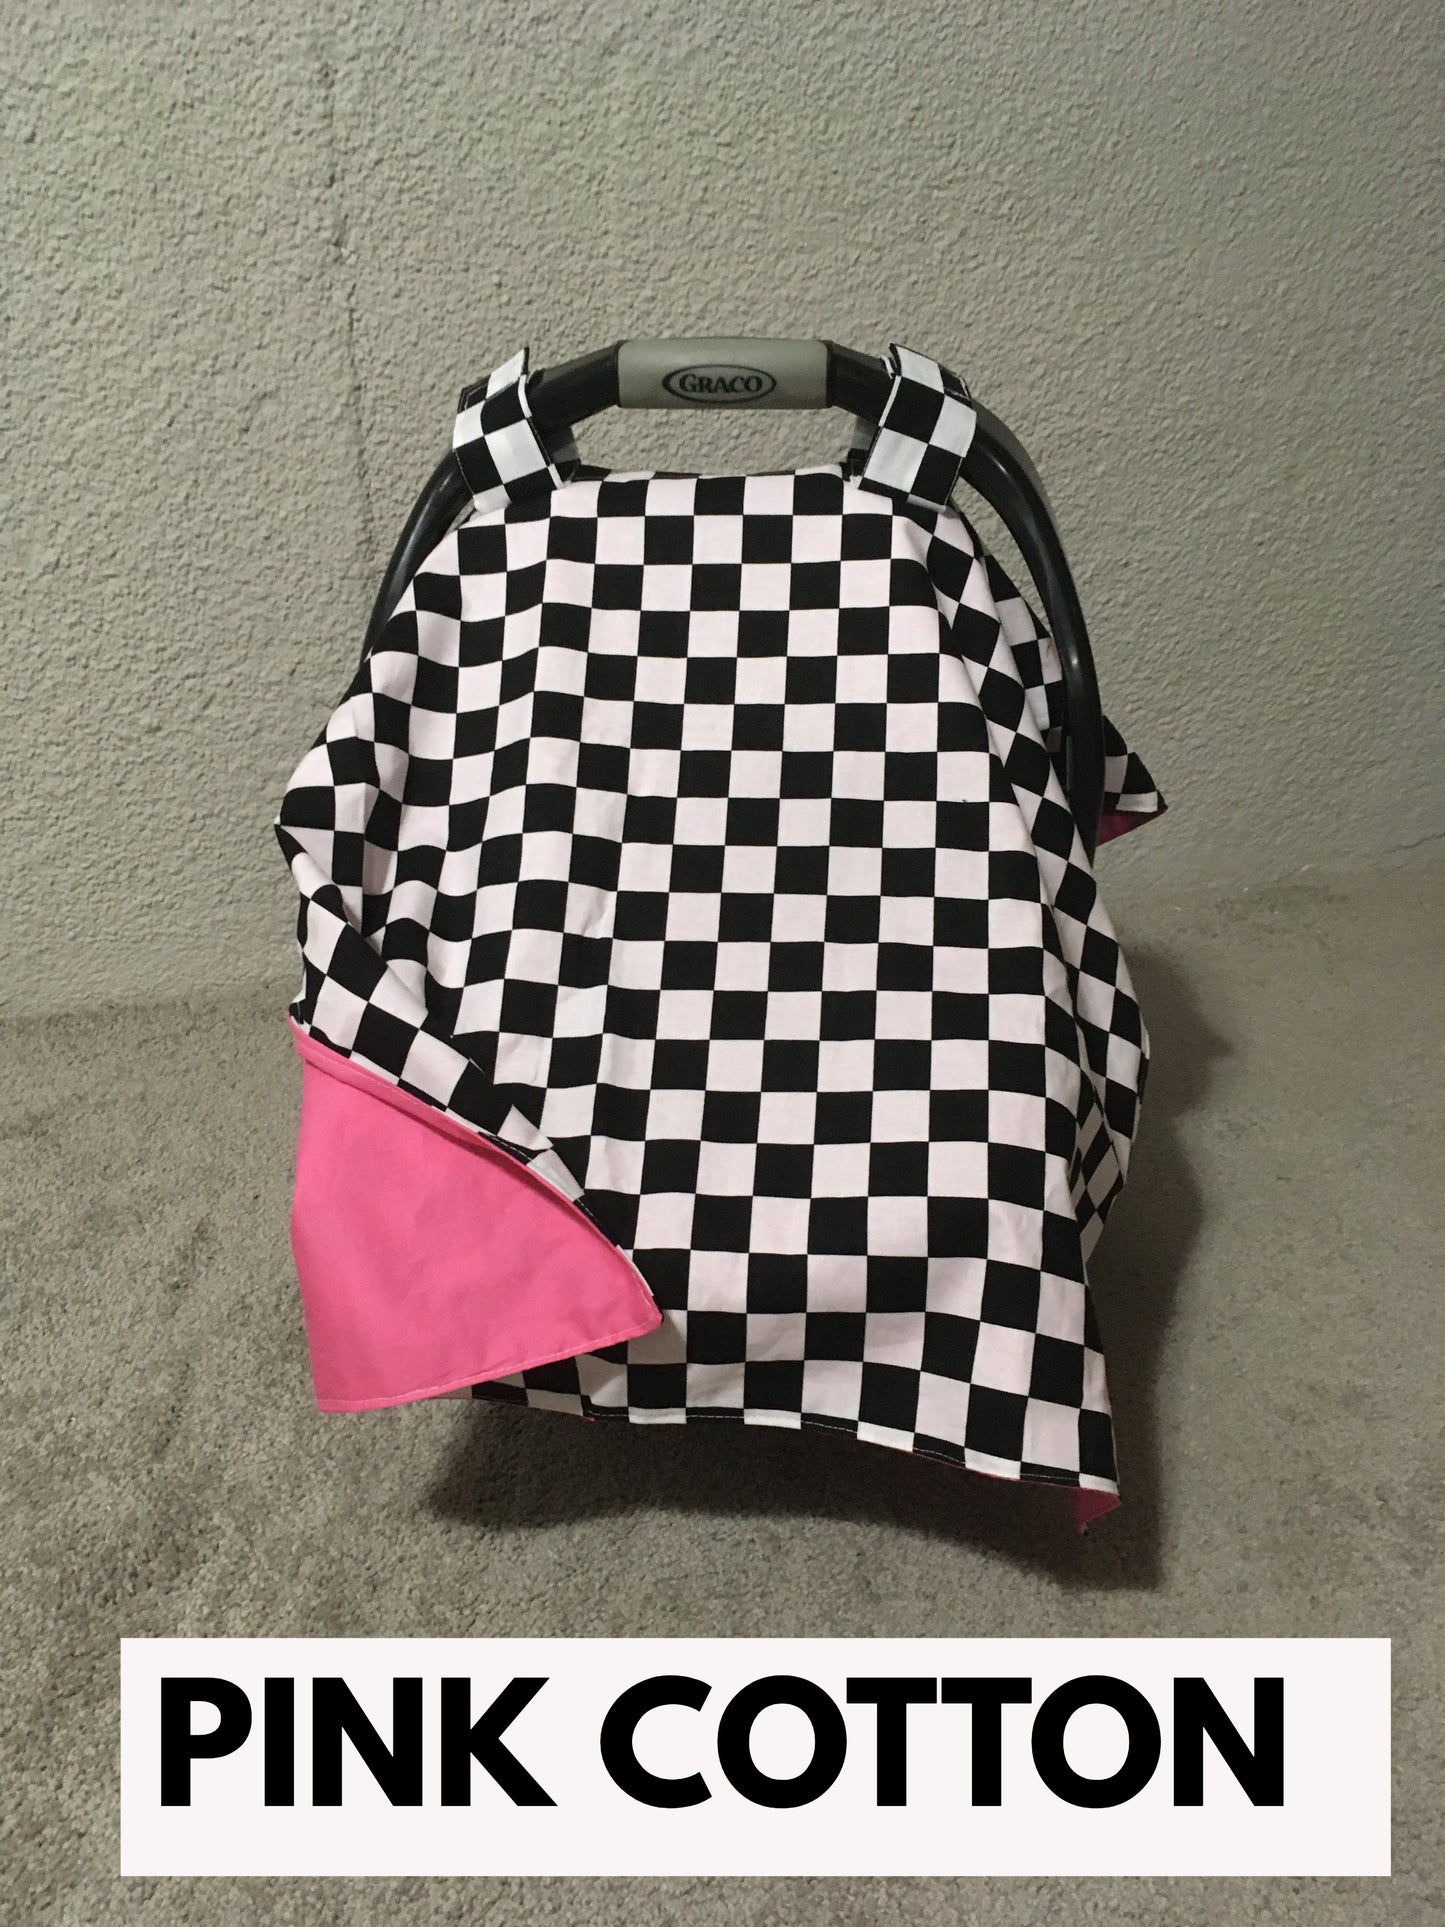 Racing Checkered Flag Car Seat Cover, Racing Baby Gifts, Racing Nursery